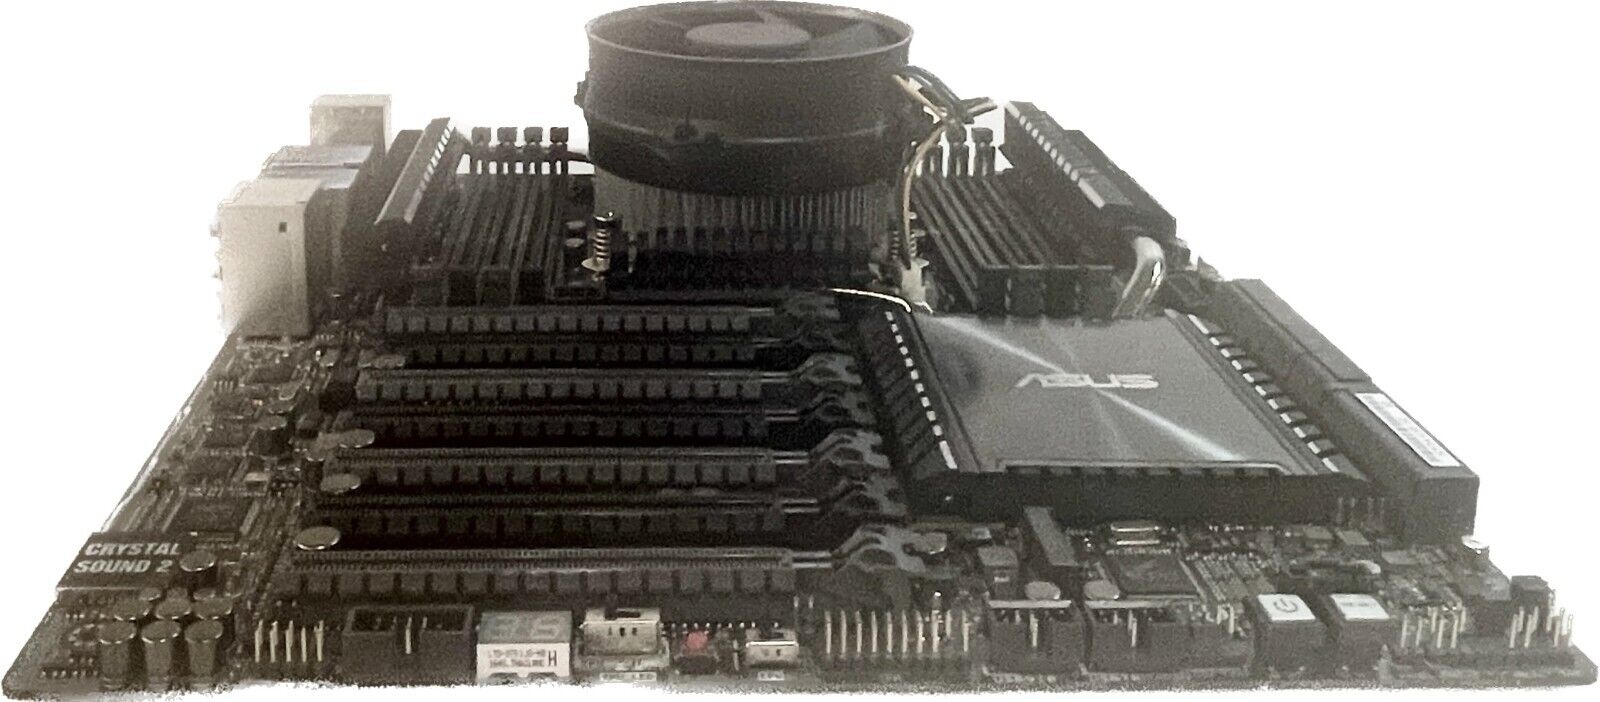 Mobo KIT Asus X99-E WS Core i7-5920K  DDR4 No HDD